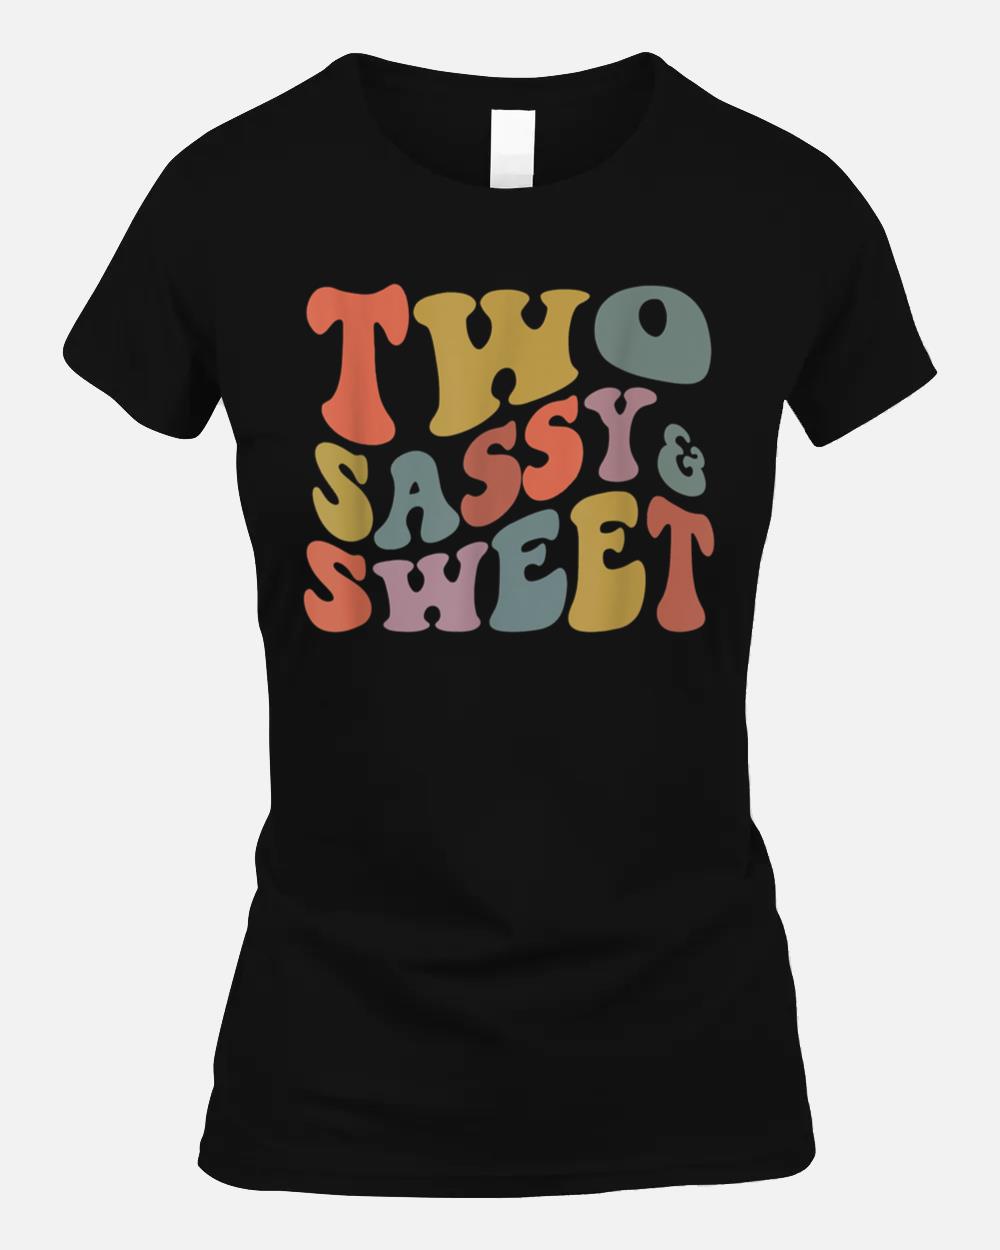 Retro Groovy Two Sassy and Sweet Birthday 2nd Birthday Unisex T-Shirt